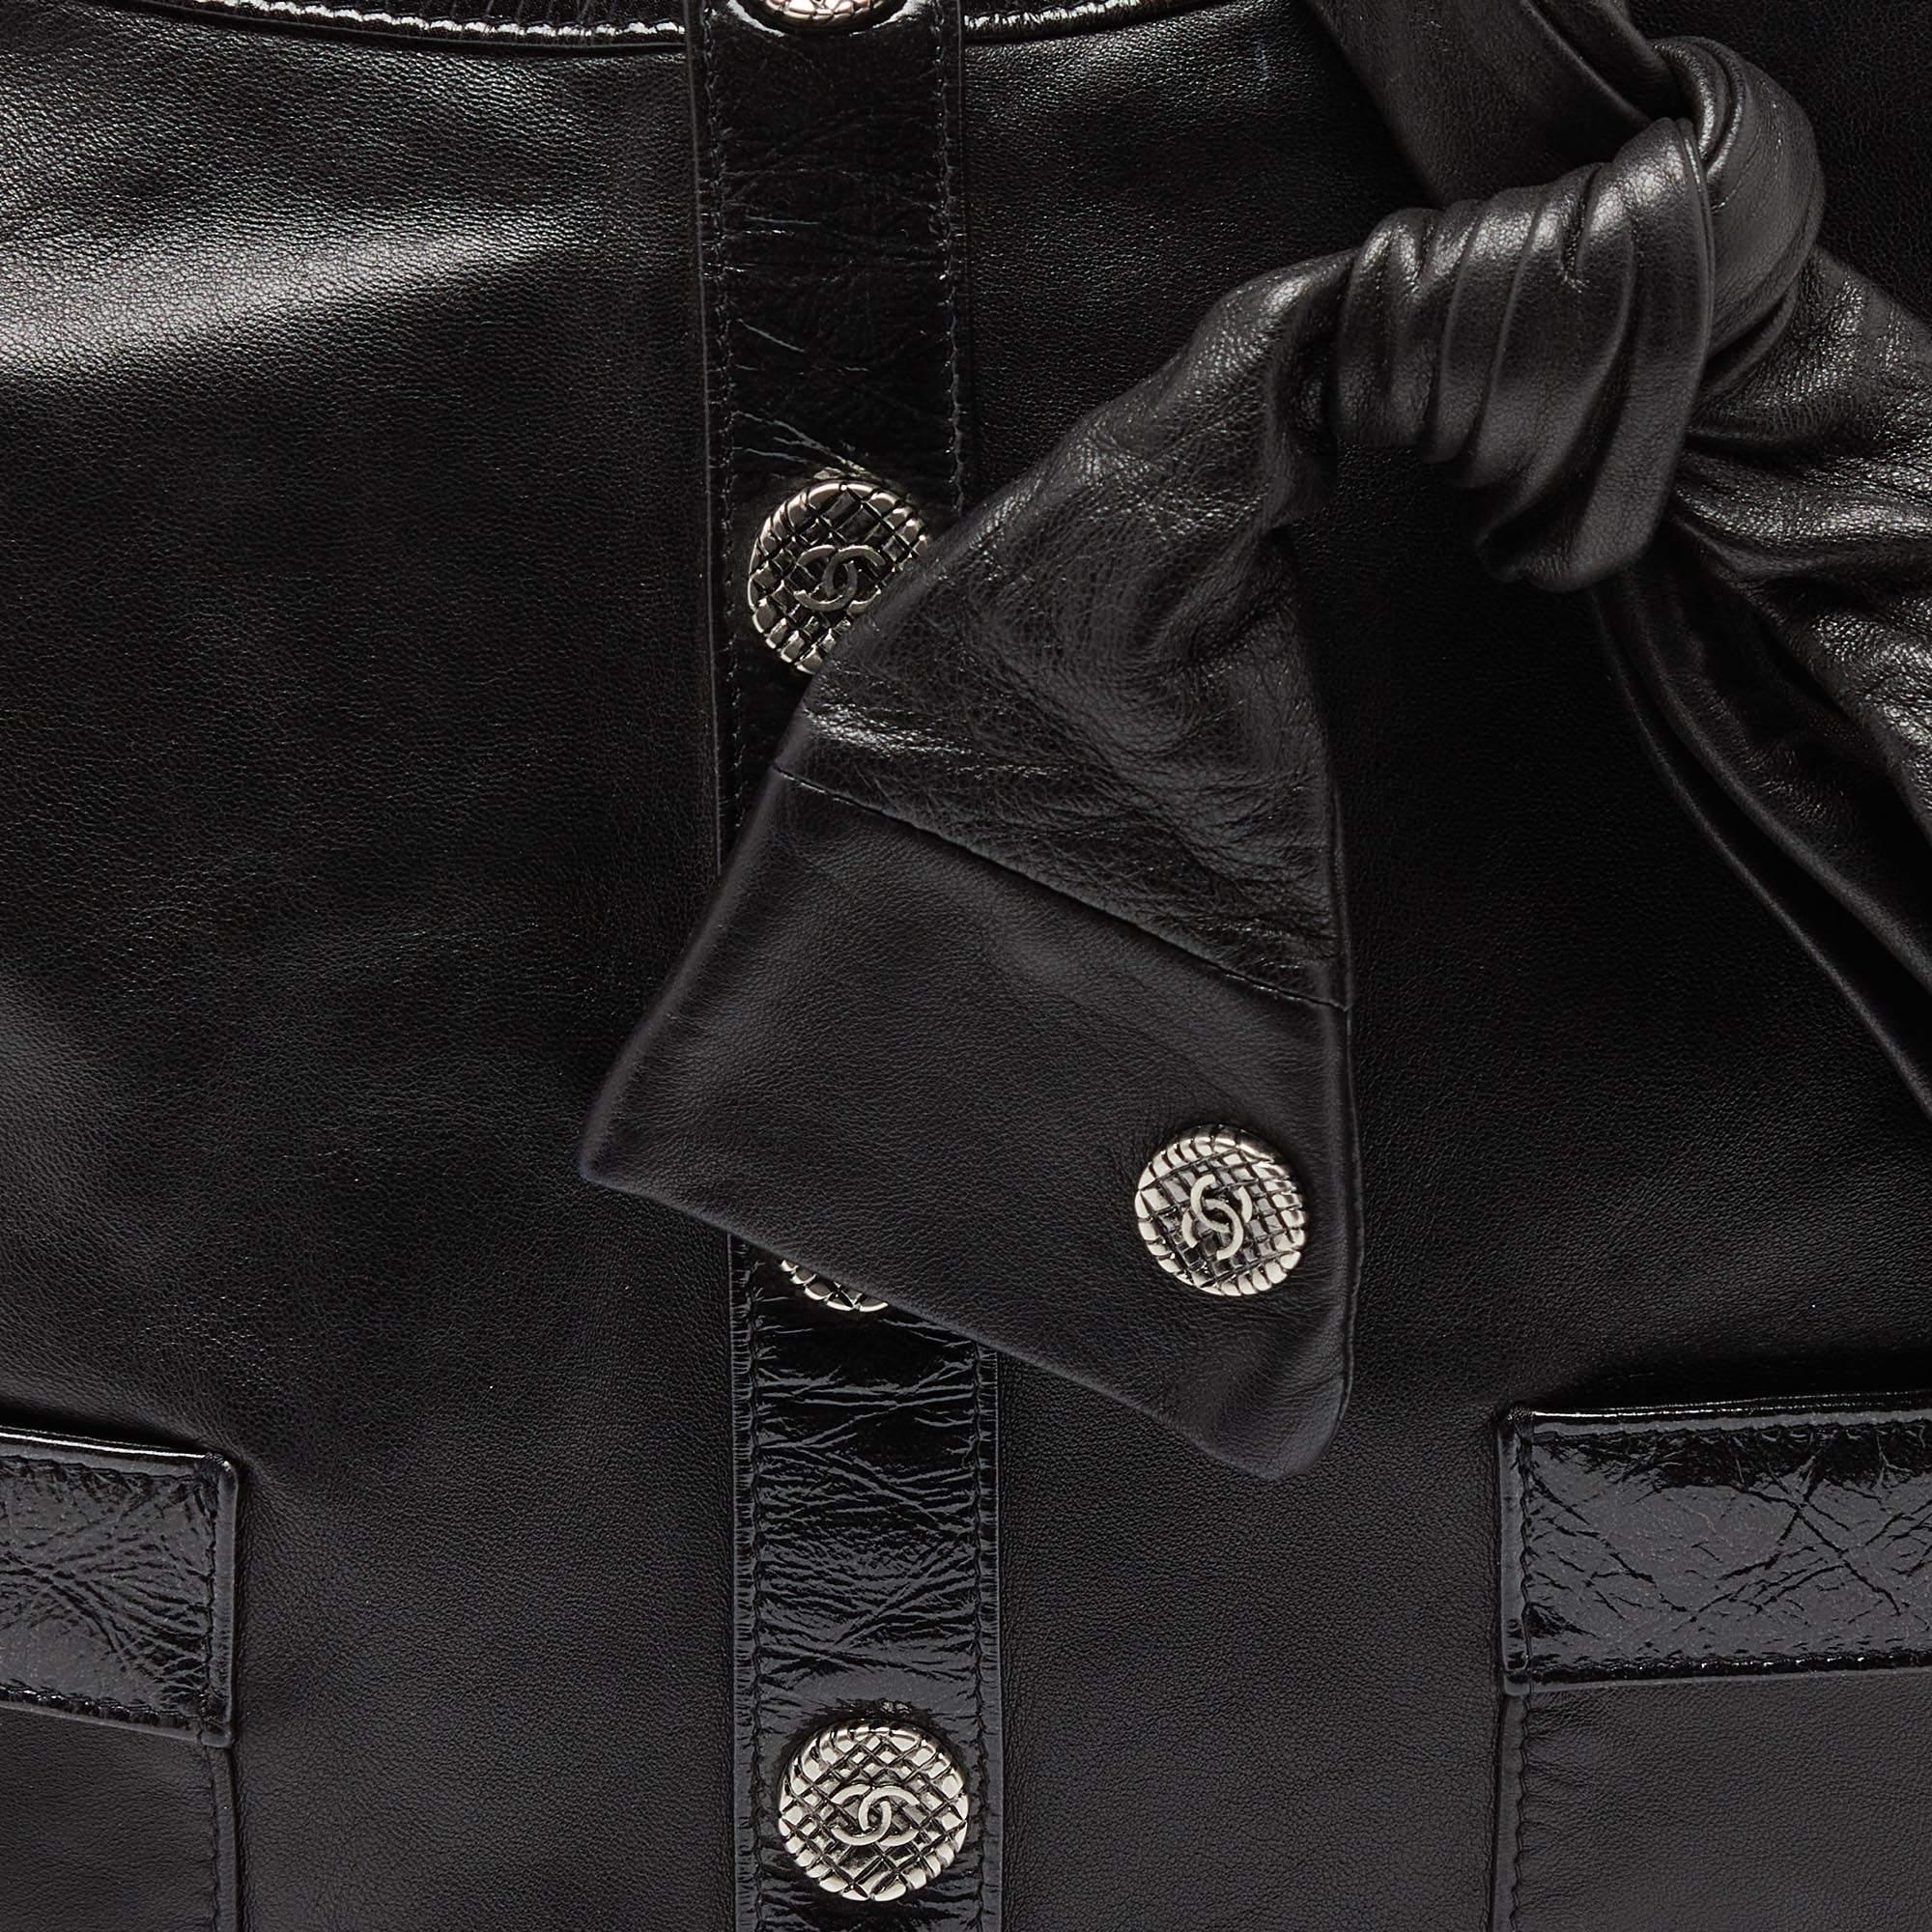 Chanel Black Leather Large Girl Chanel Bag For Sale 3